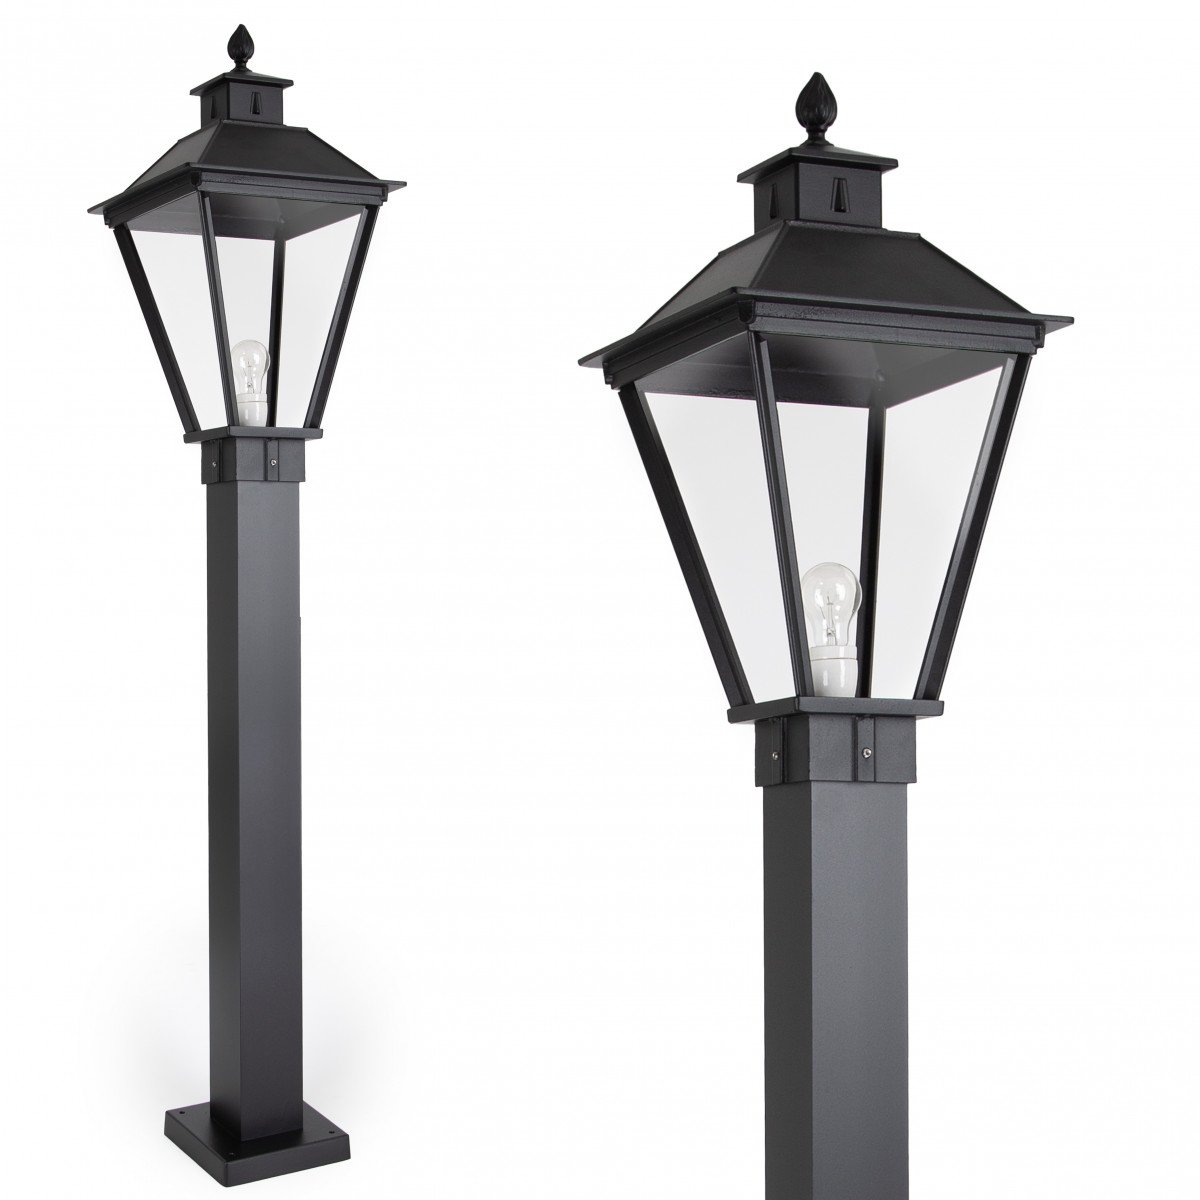 Klassieke buitenlamp Square Terras XL tuinlamp vierkant in de kleur zwart